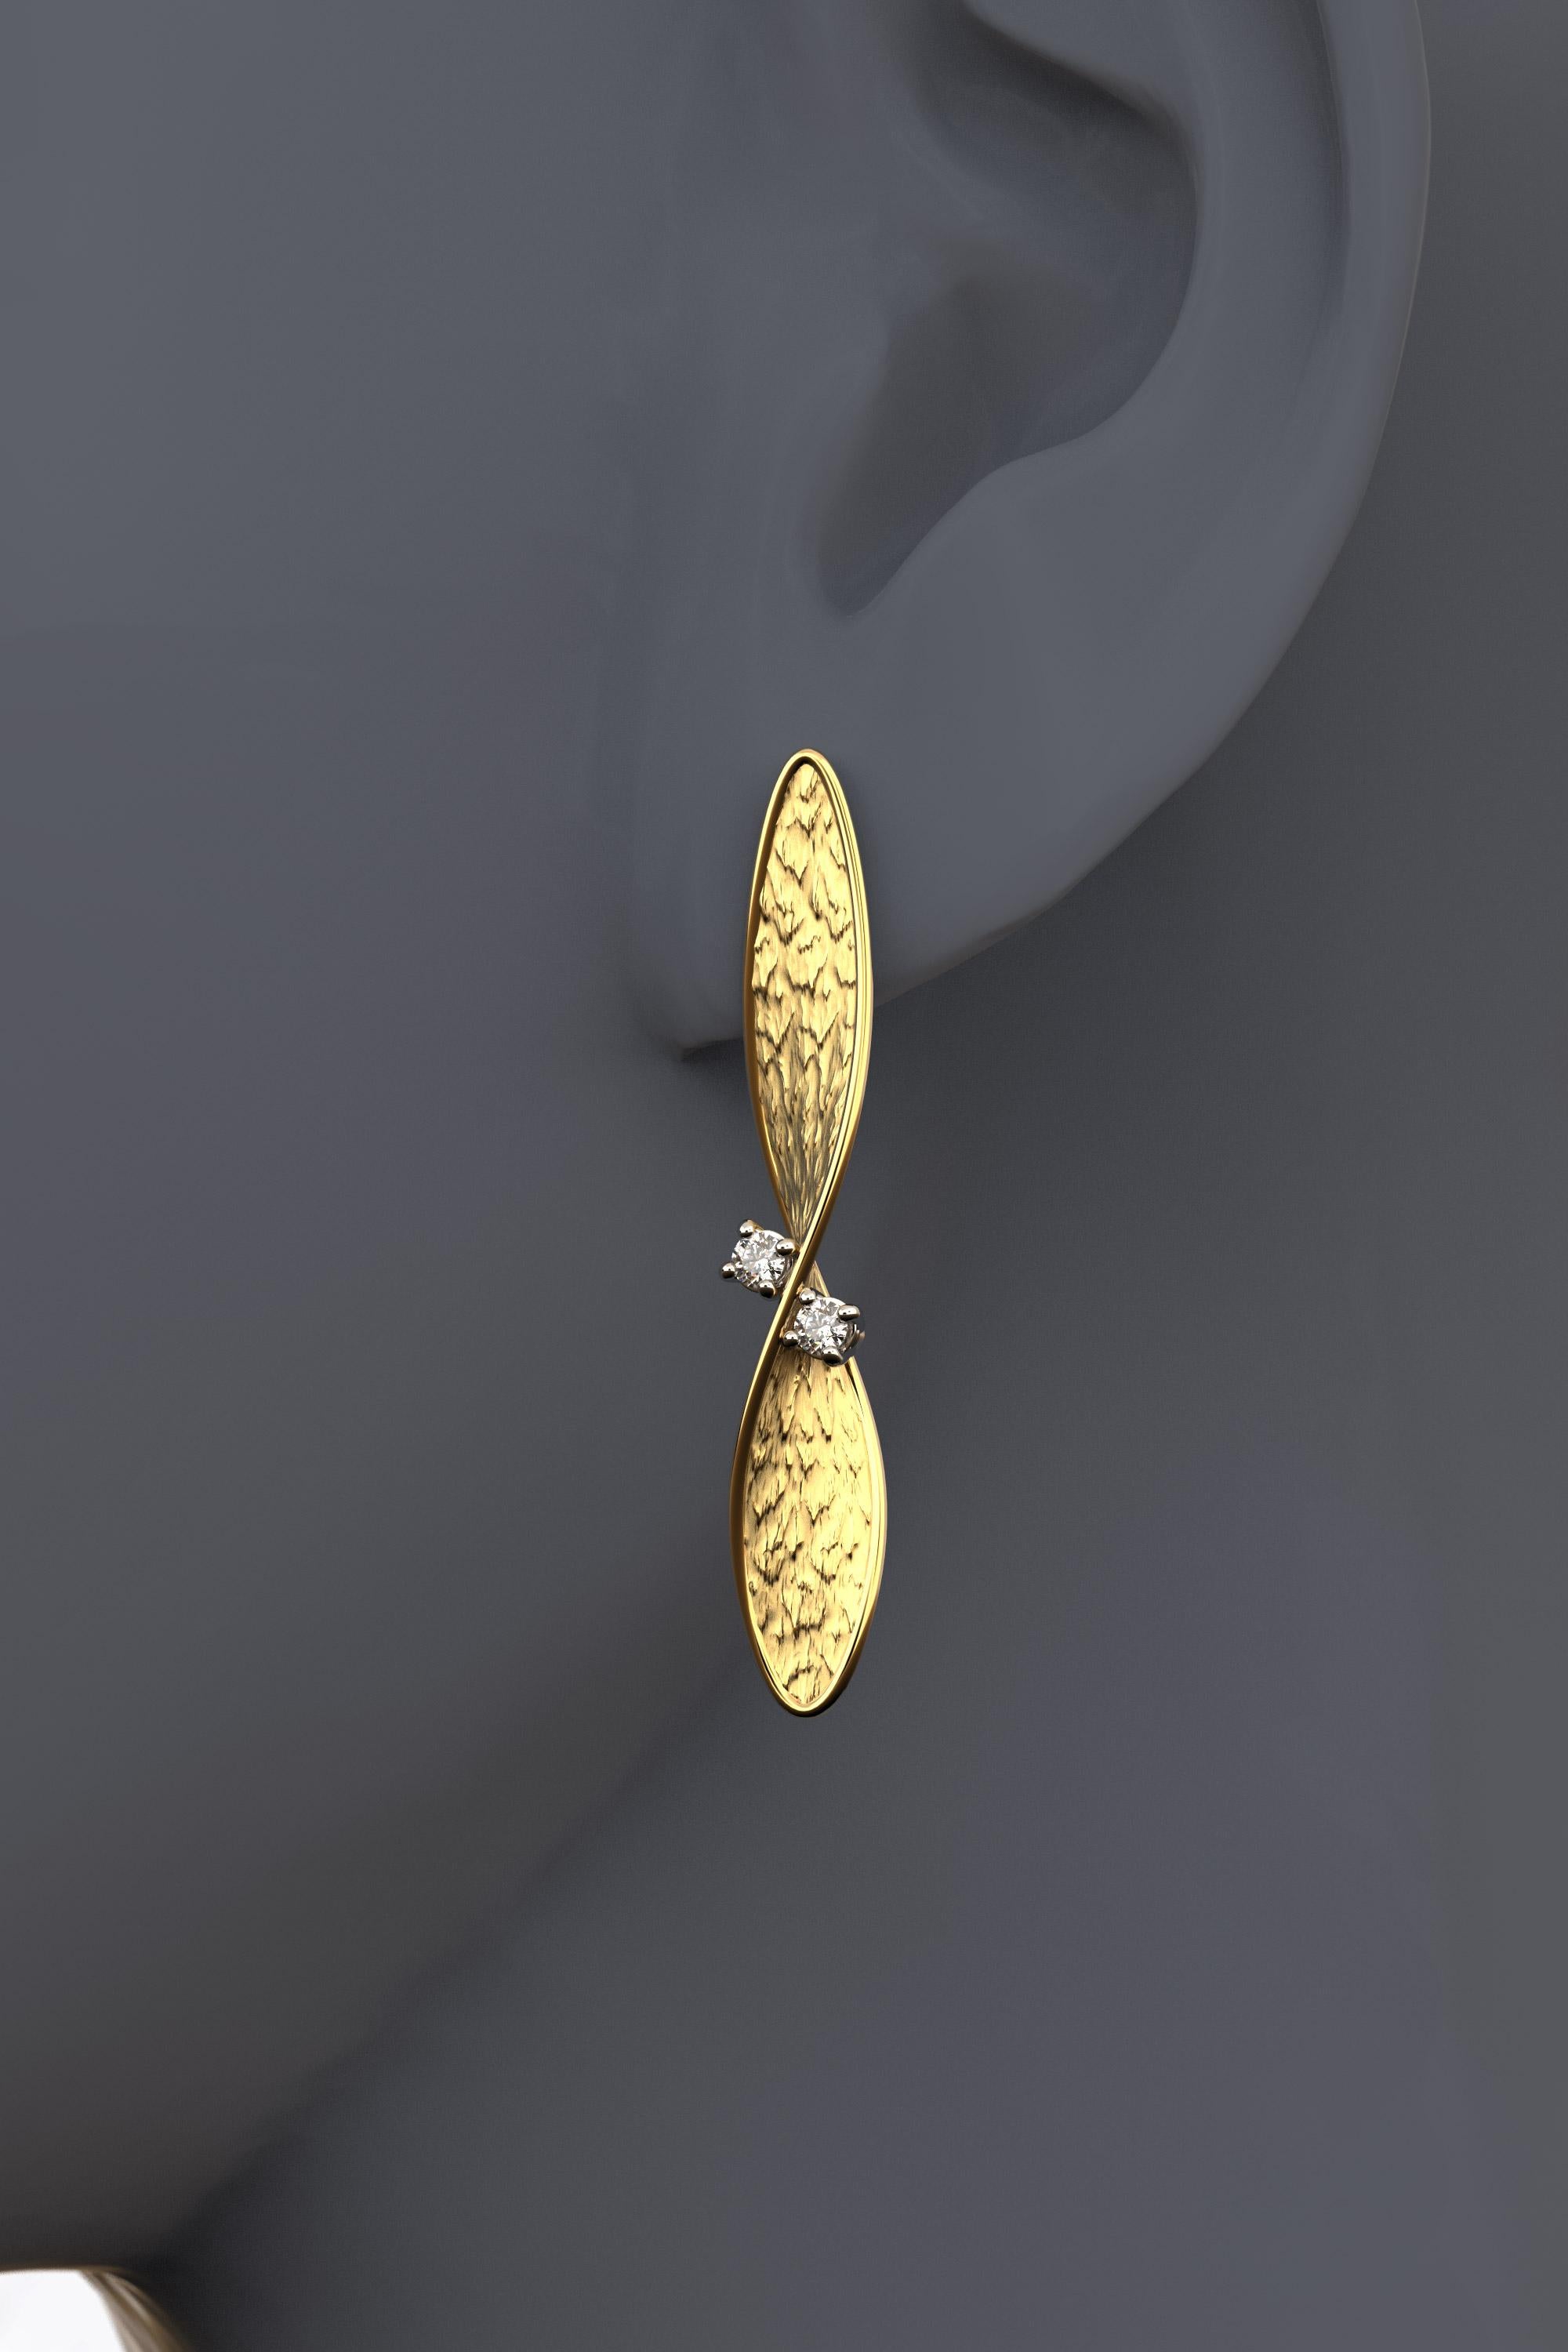 Brilliant Cut Oltremare Gioielli, Italian Jewelry, 14k Gold Diamond Earrings Made in Italy For Sale